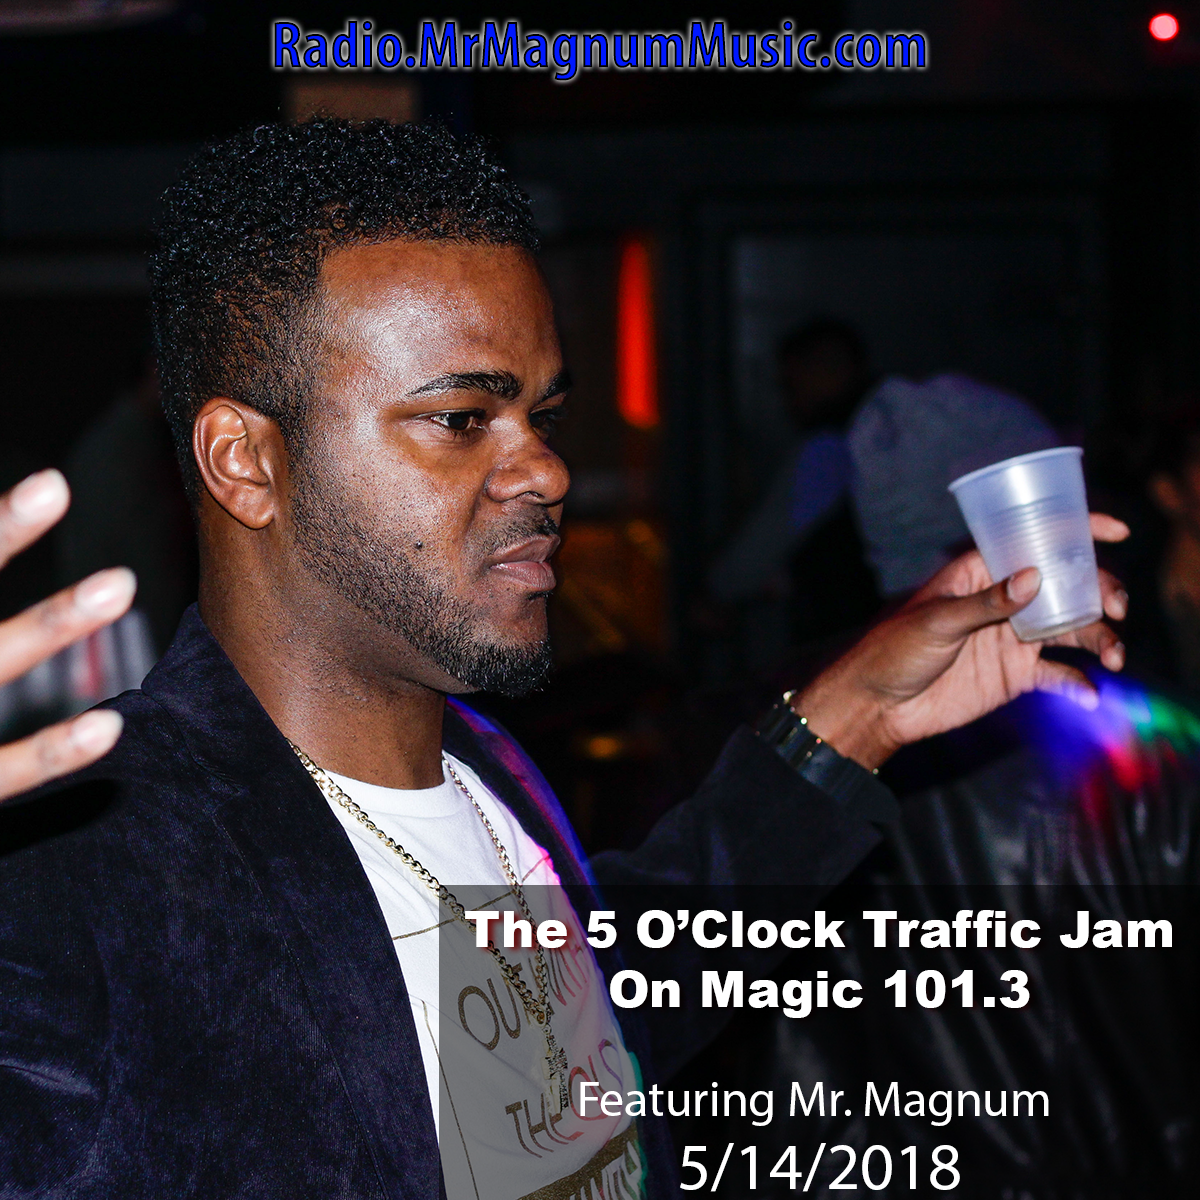 The 5 O'Clock Traffic Jam 20180518 featuring Gainesville's #1 DJ, Mr. Magnum on Magic 101.3